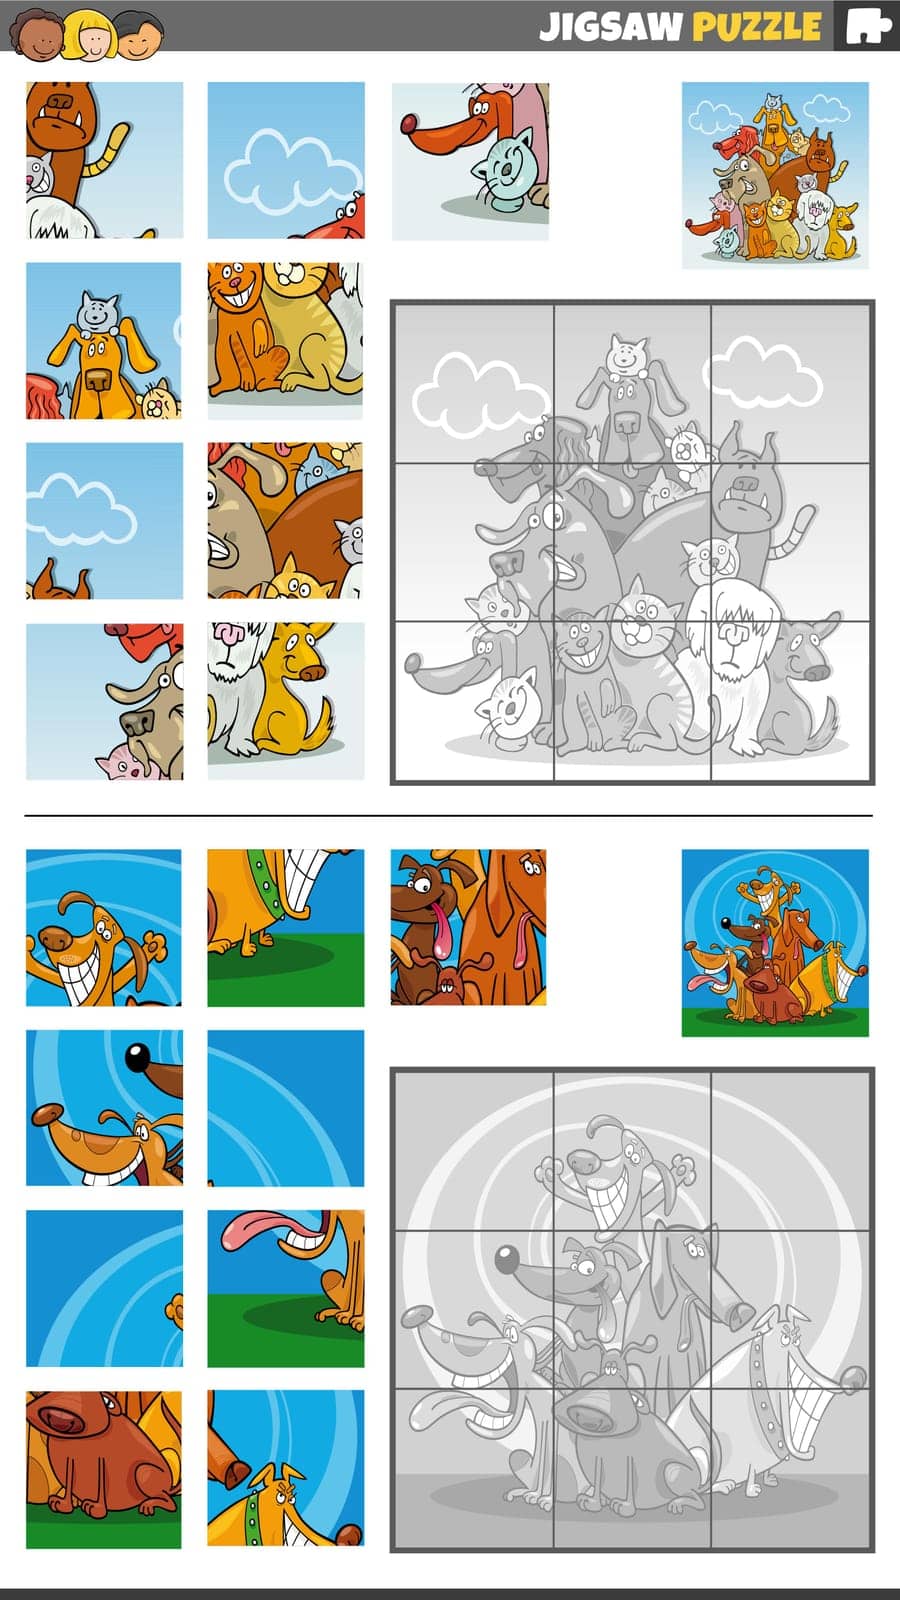 jigsaw puzzle game set with cartoon dogs characters by izakowski